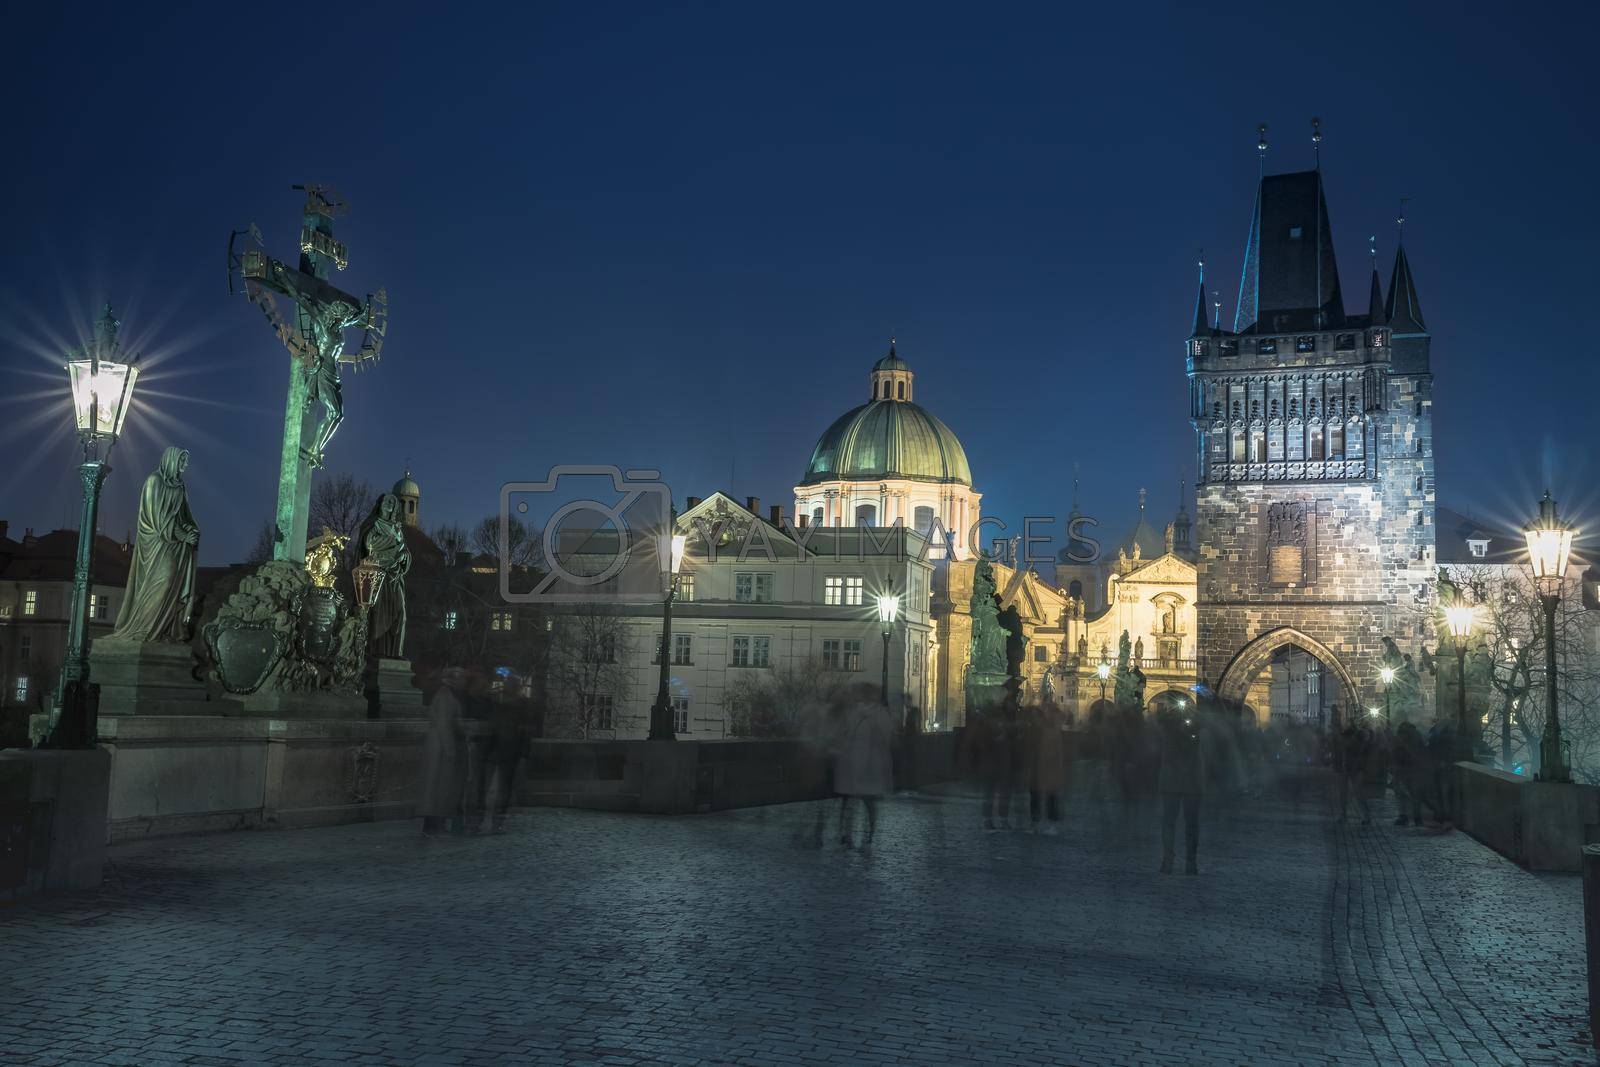 Royalty free image of Charles bridge illuminated at night, Medieval Prague, Czech Republic by positivetravelart